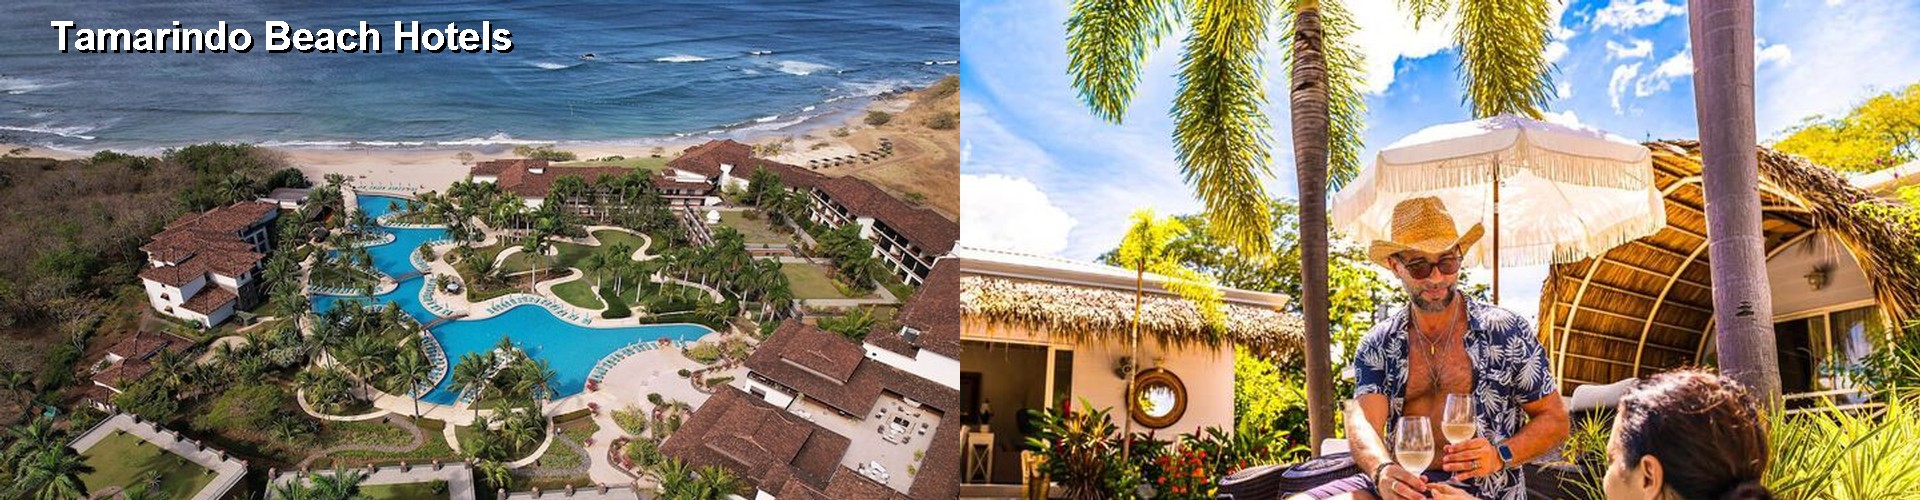 5 Best Hotels near Tamarindo Beach